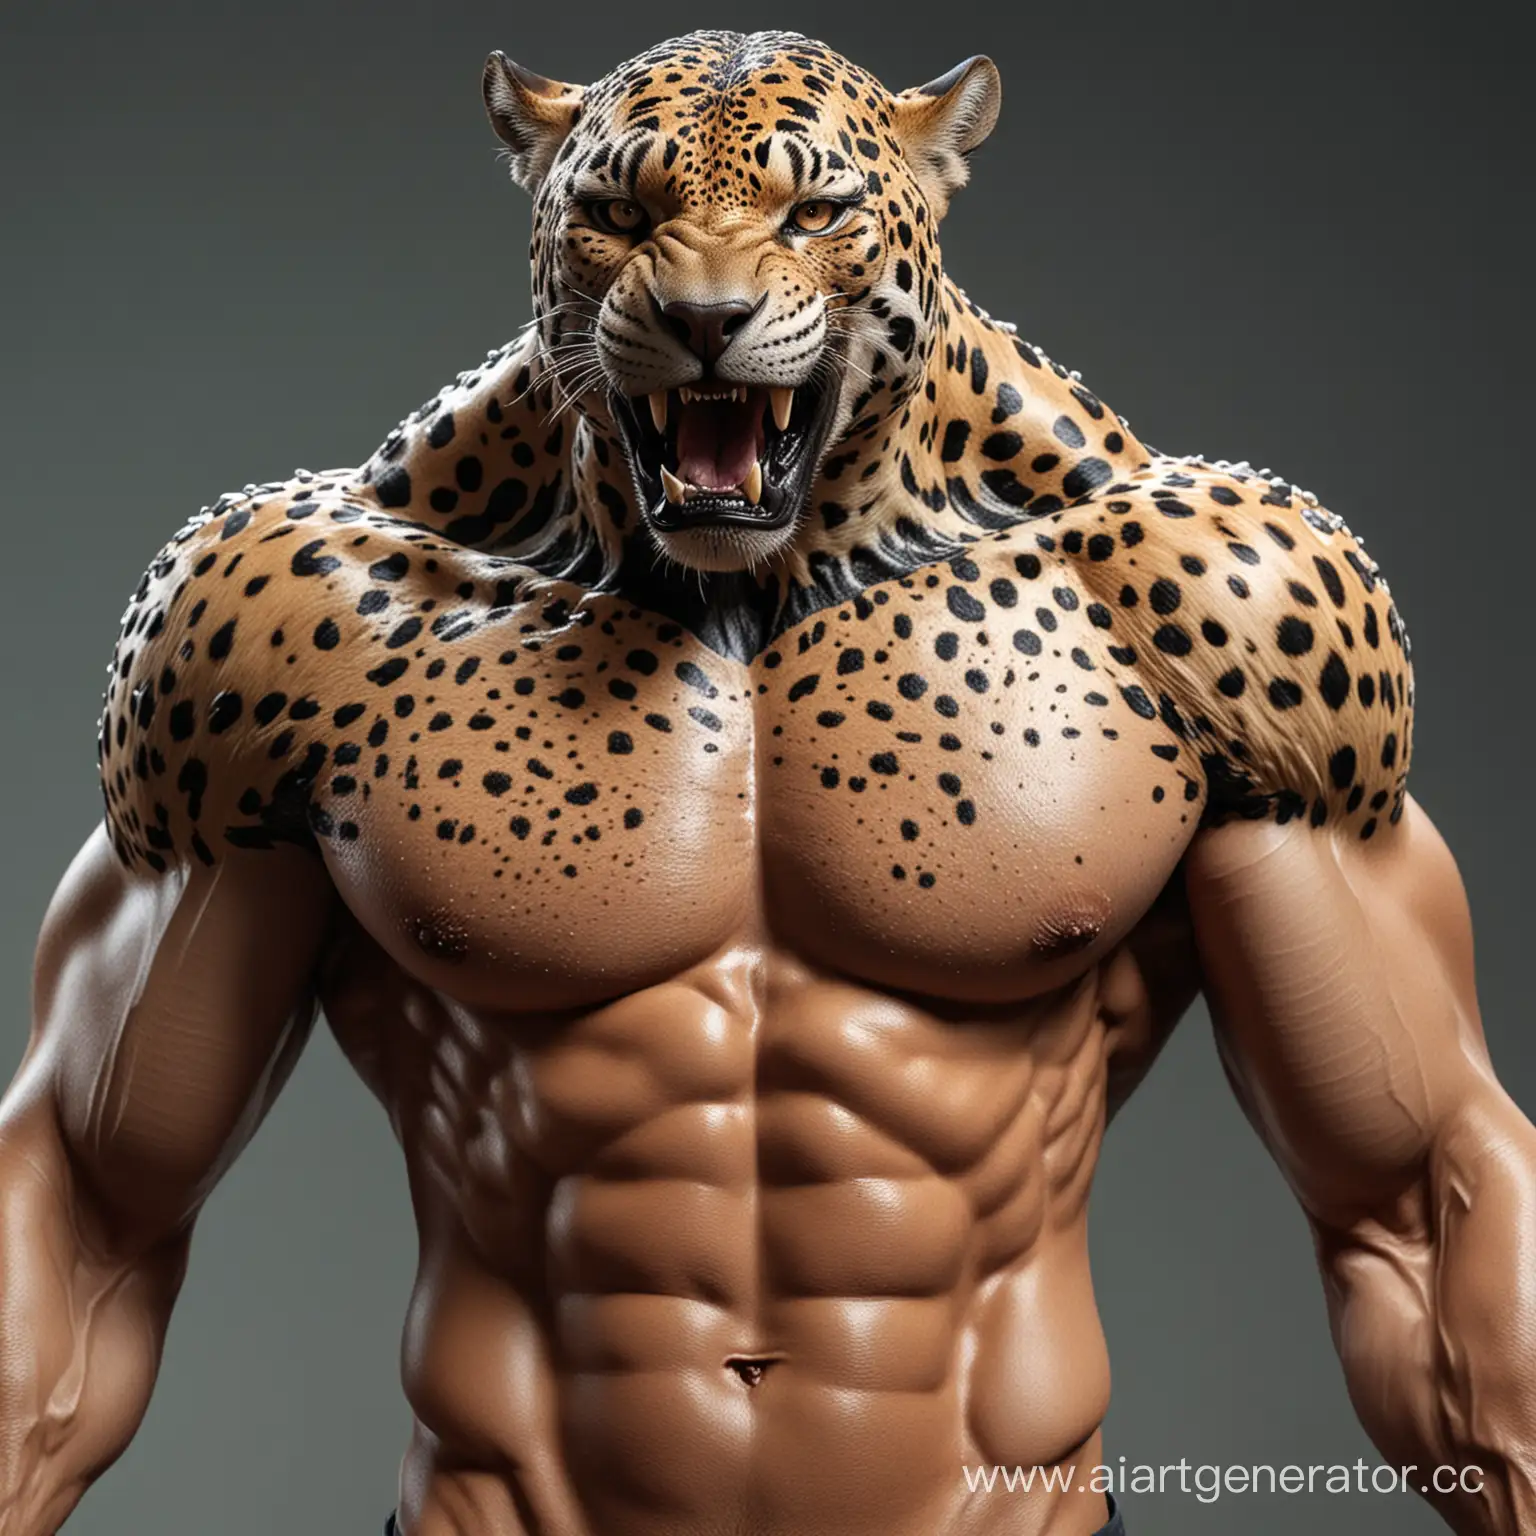 Ferocious-ManJaguar-Hybrid-UltraRealistic-Growling-HalfJaguar-Man-with-Striking-Relief-Muscles